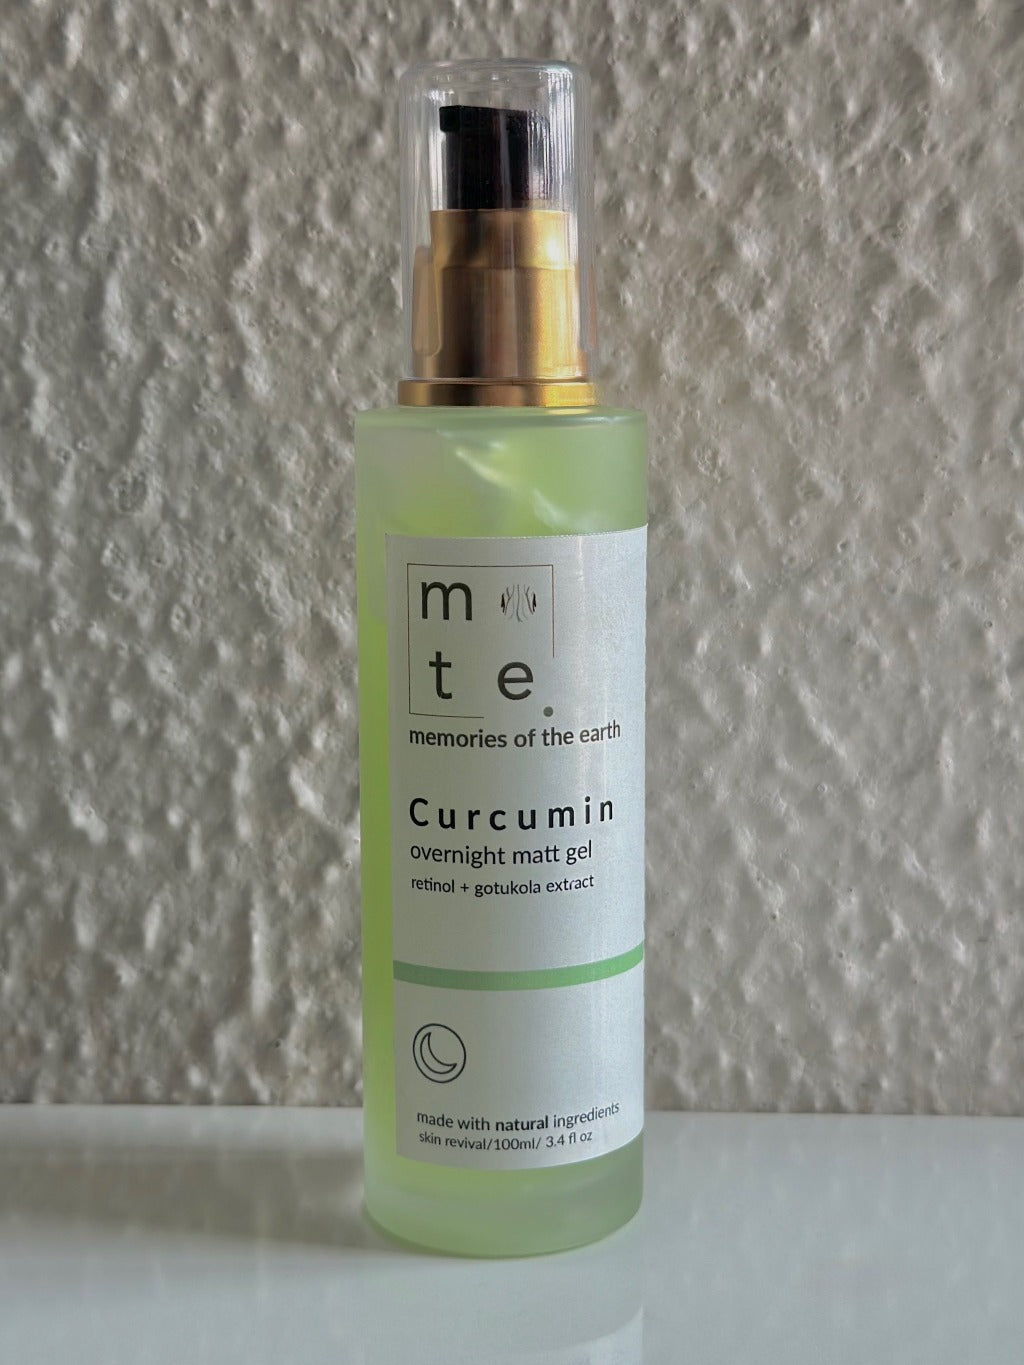 Curcumin overnight matt gel | Skin revival